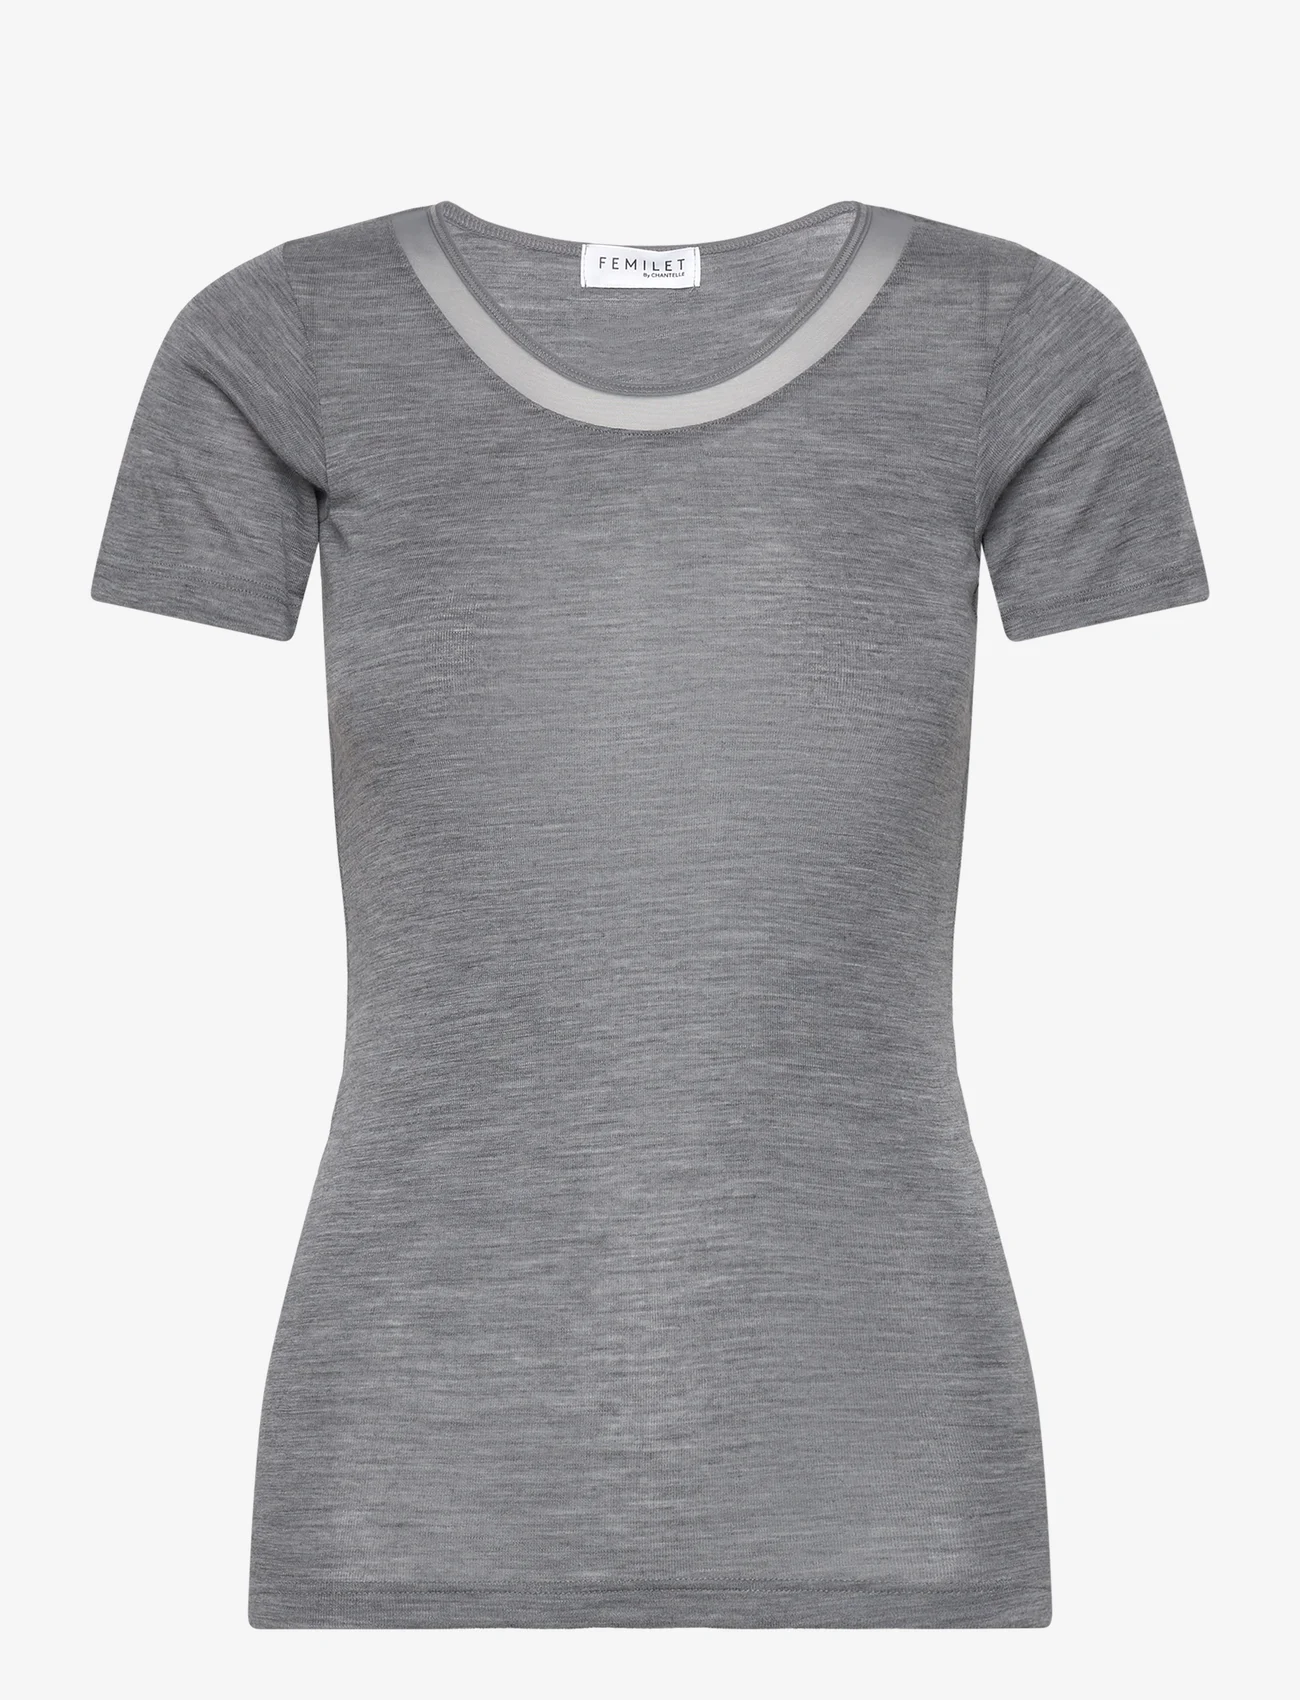 Femilet - Juliana T-shirt Short sleeve - t-skjorter - heather grey - 1